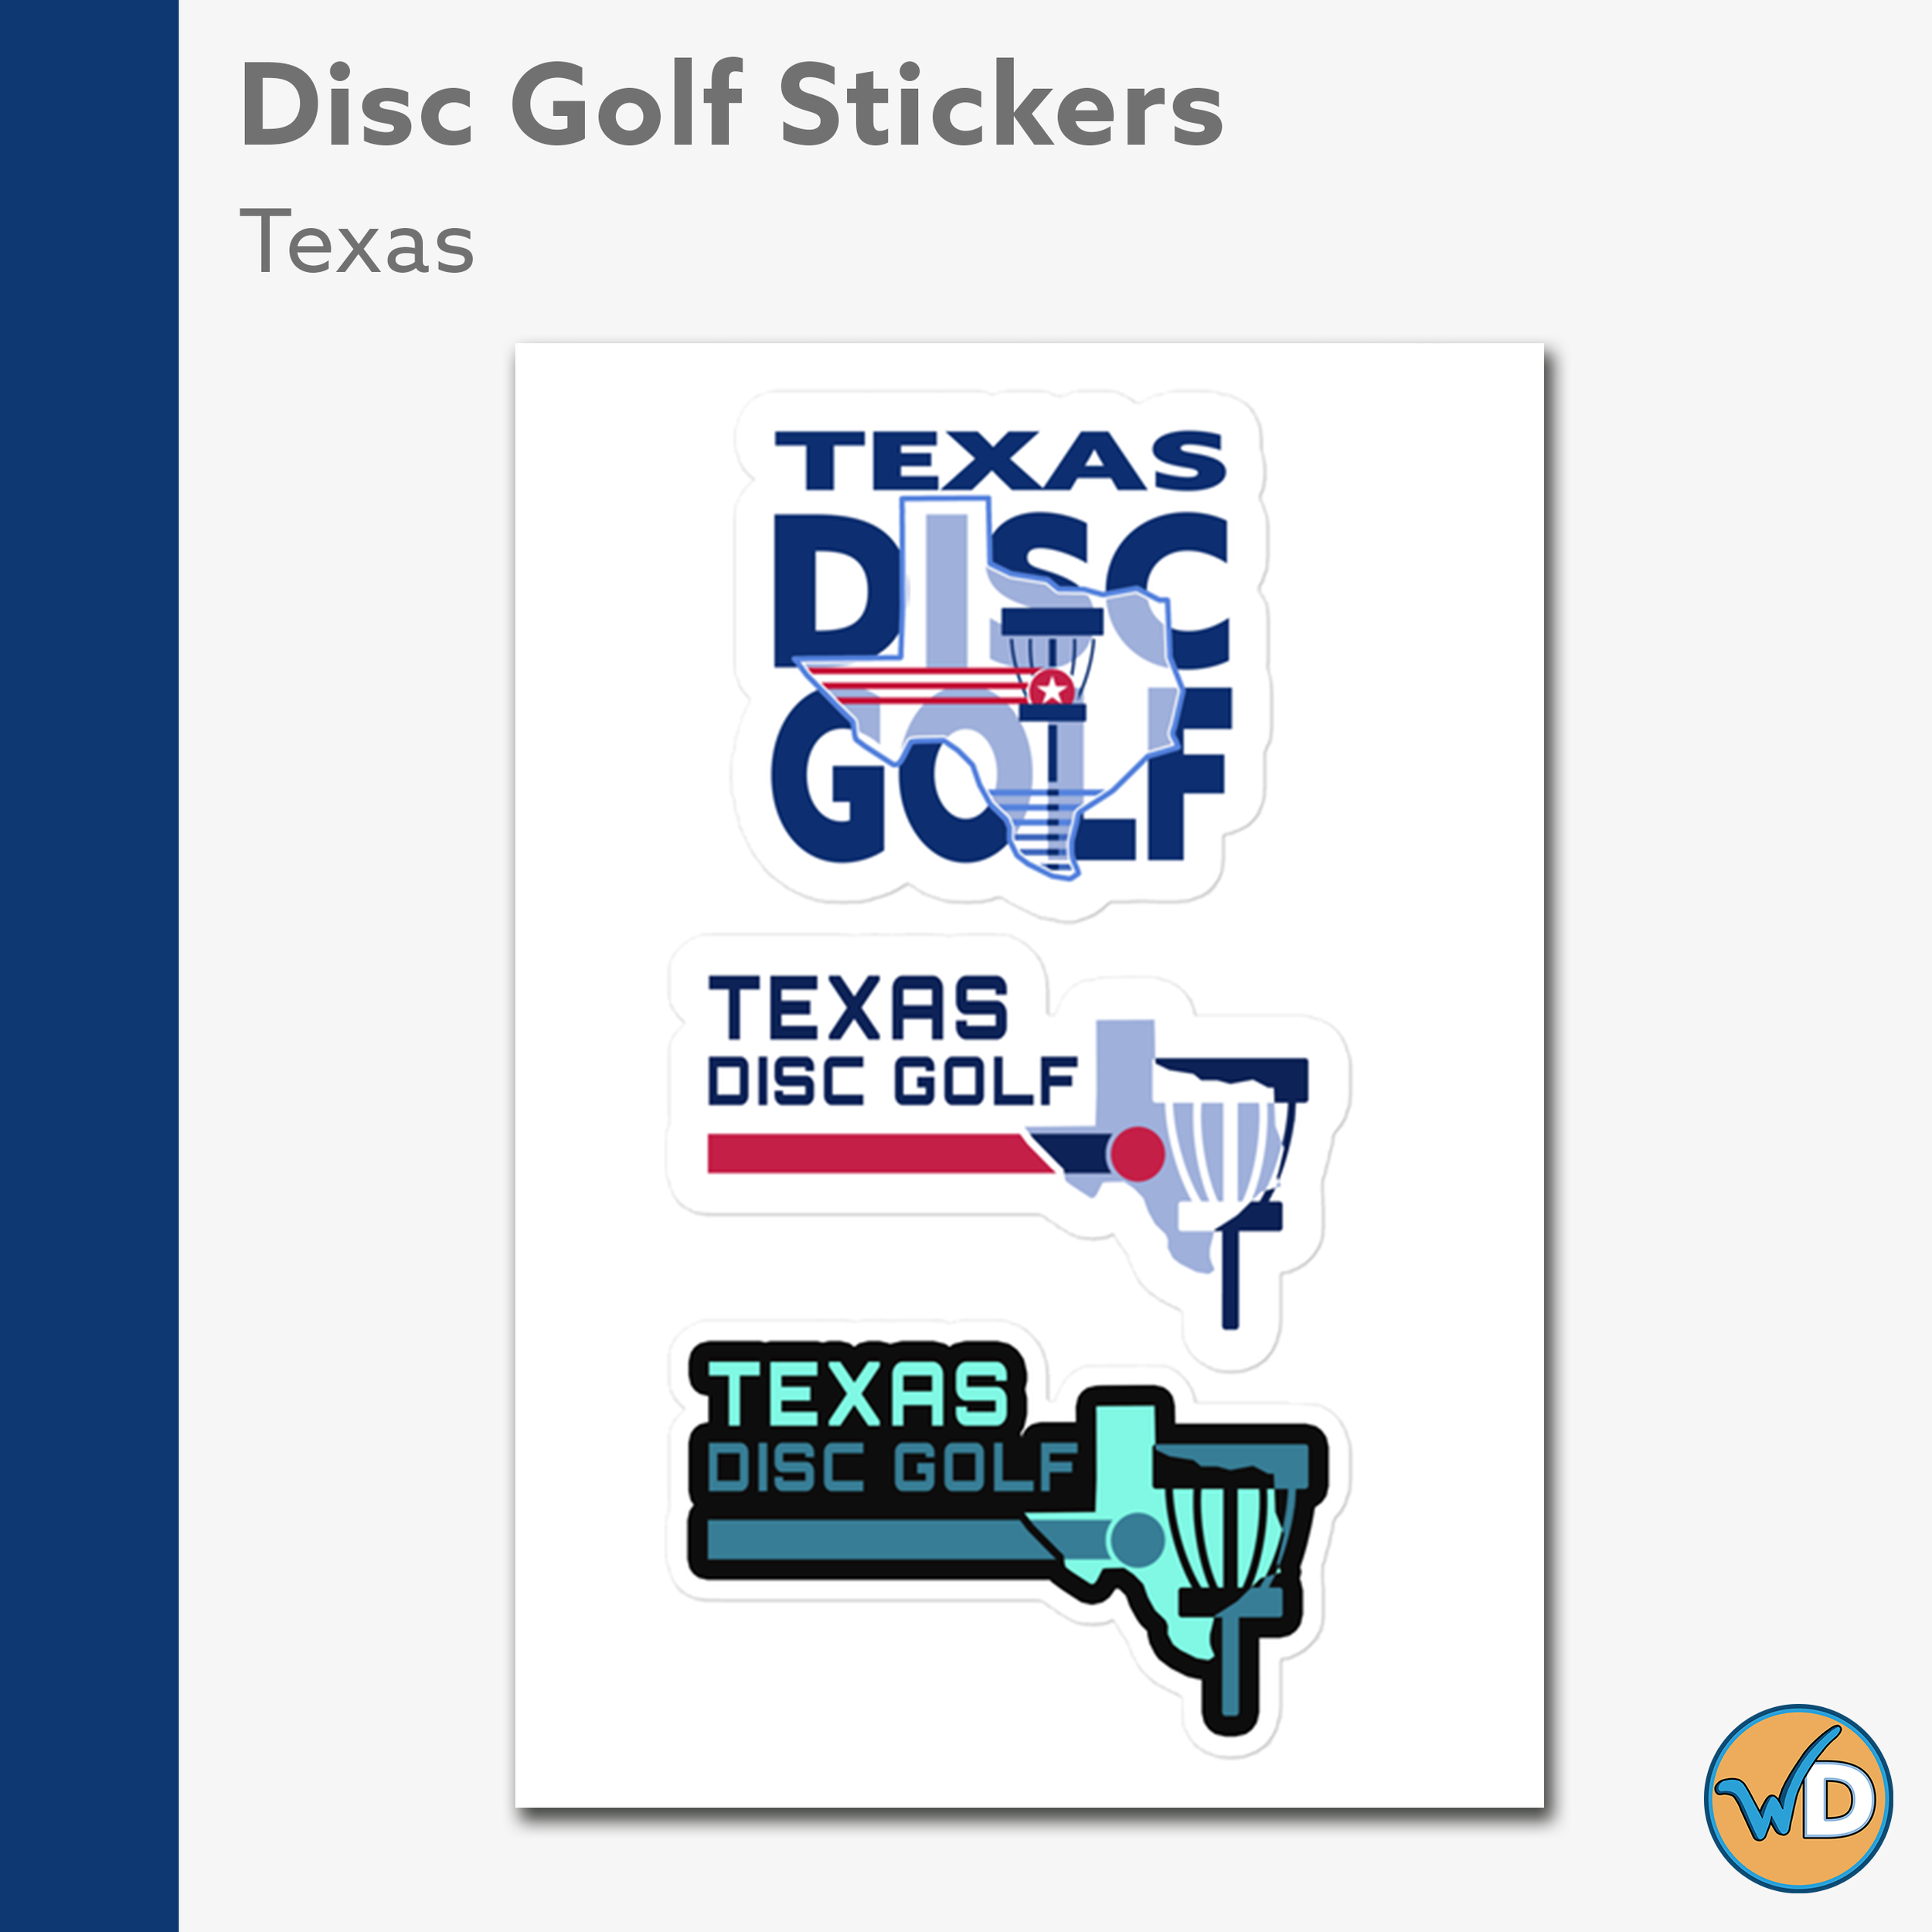 Texas Disc Golf Stickers